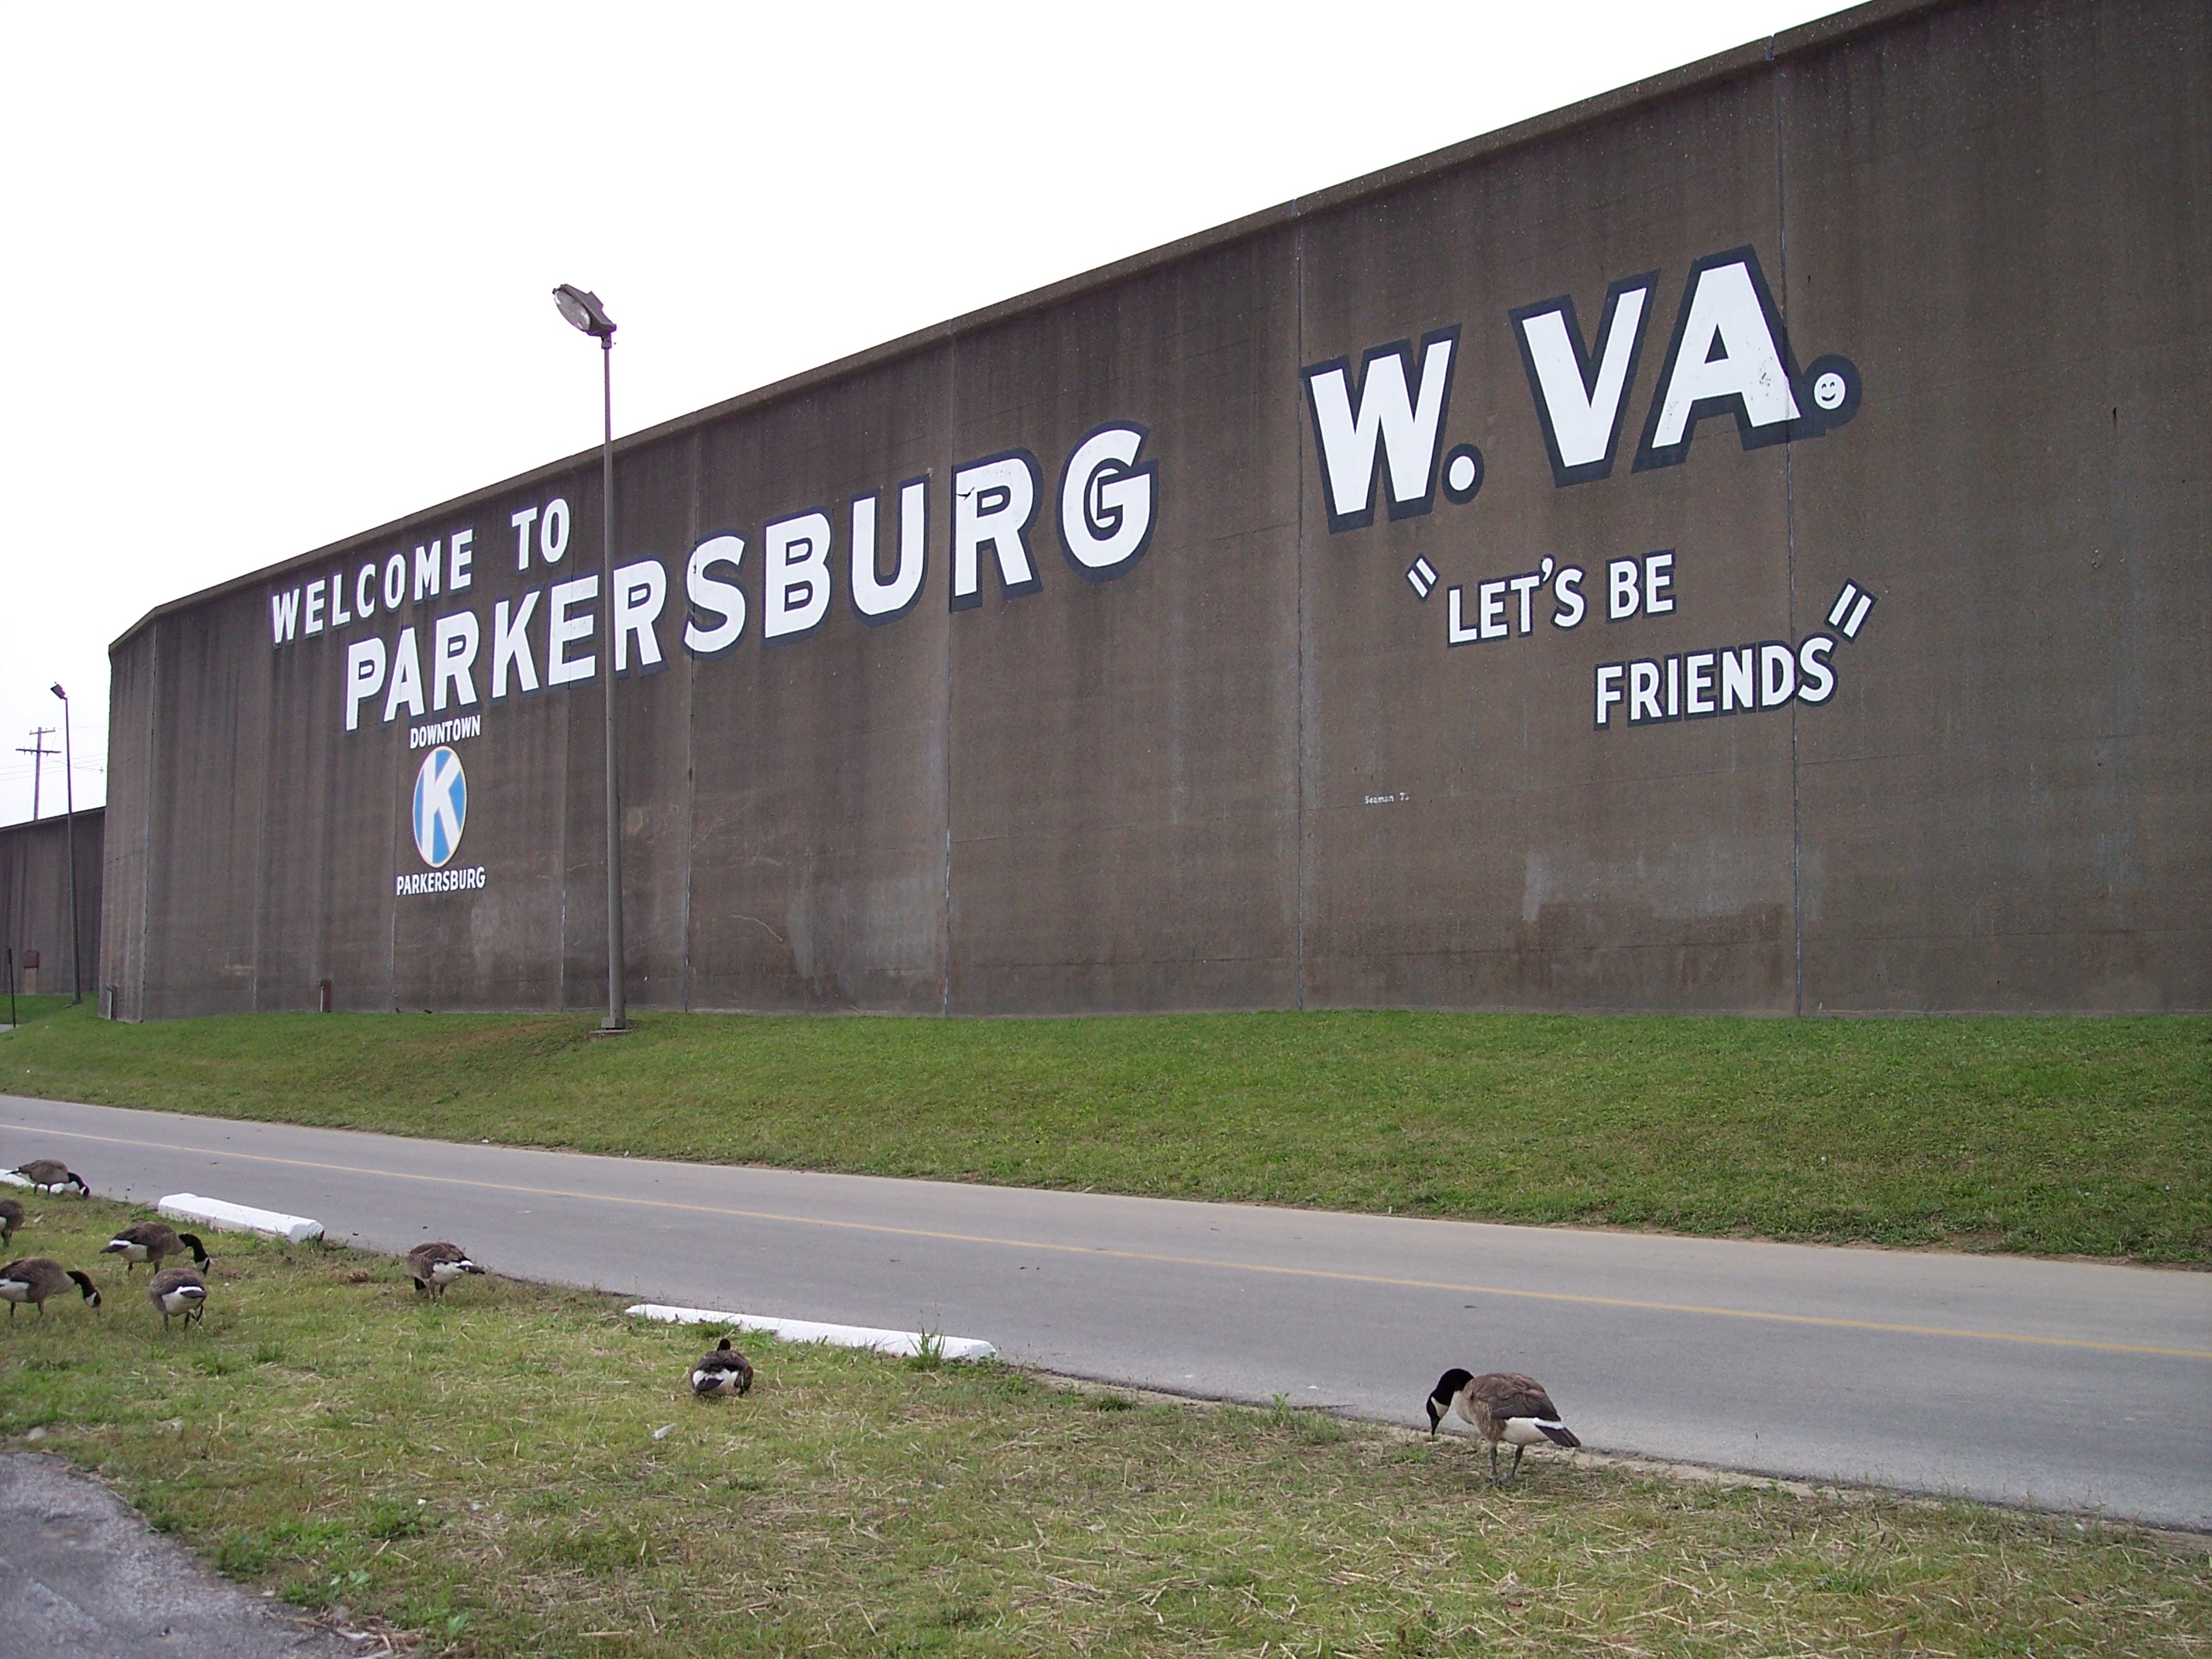 File:Parkersburg West Virginia floodwall.jpg - Wikipedia